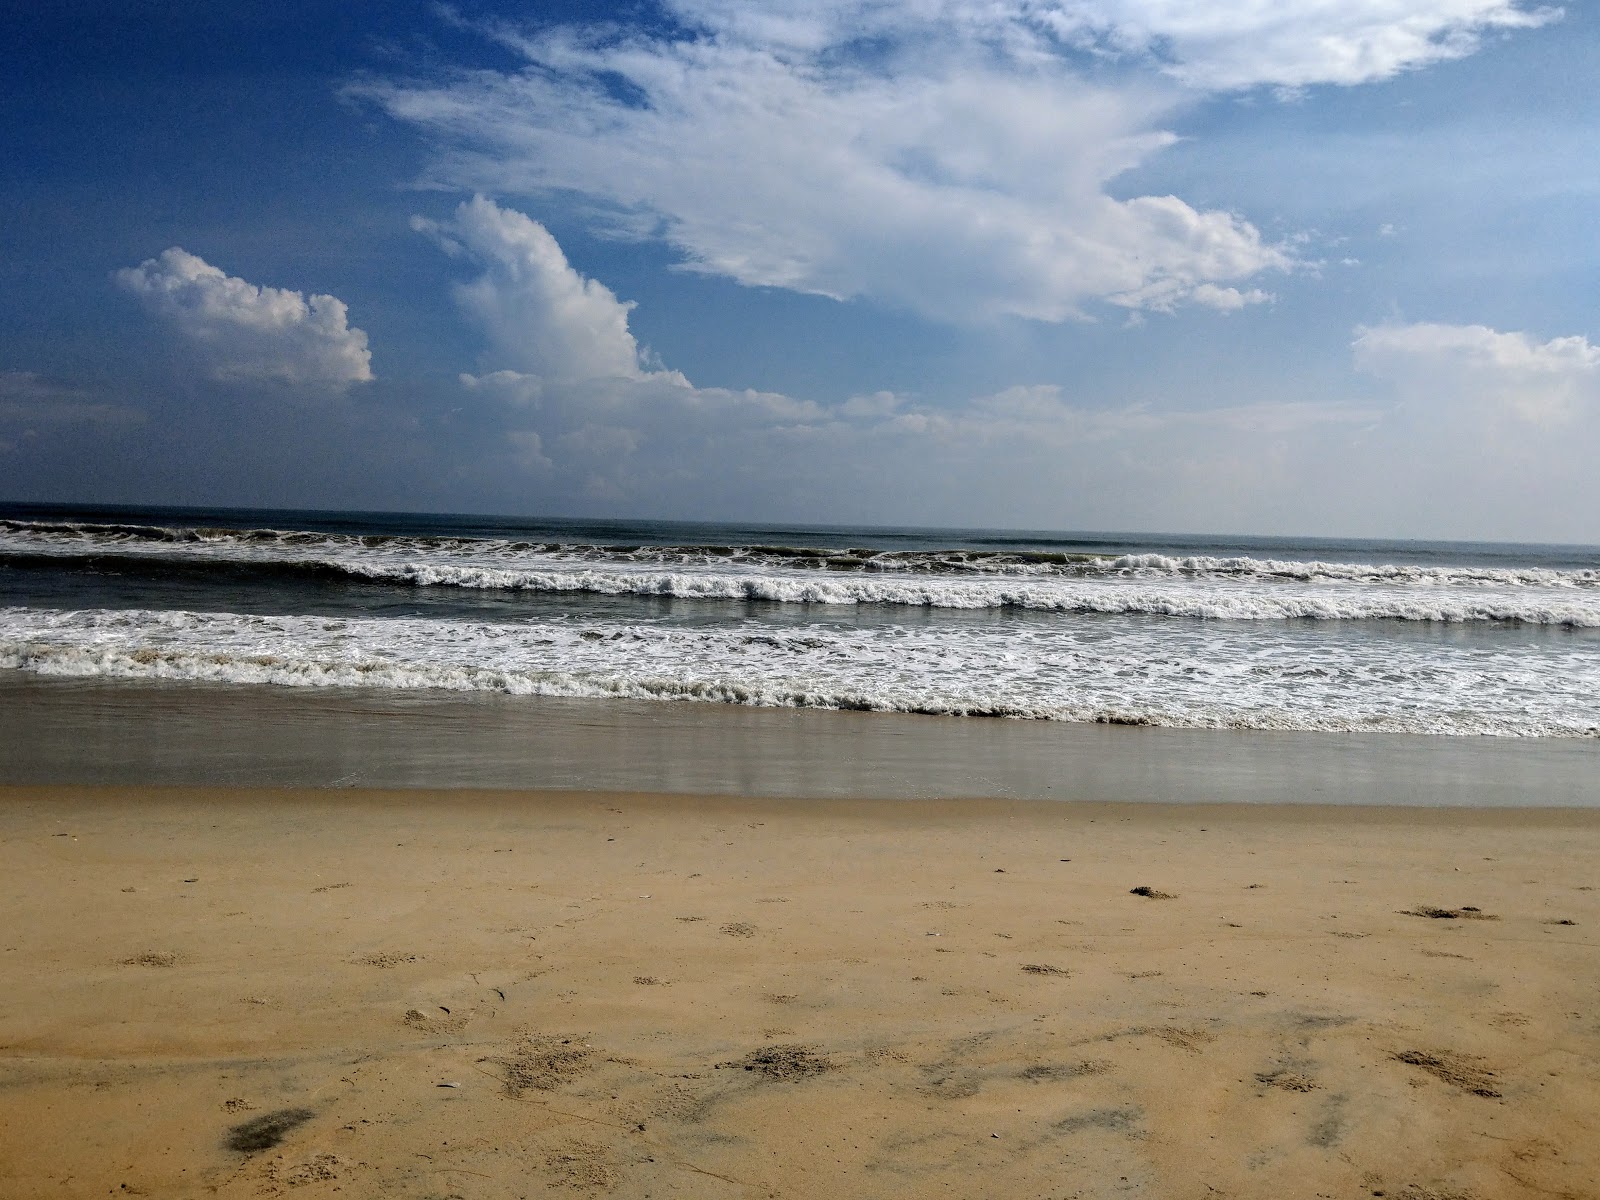 Zdjęcie Vinh Hai Beach z proste i długie